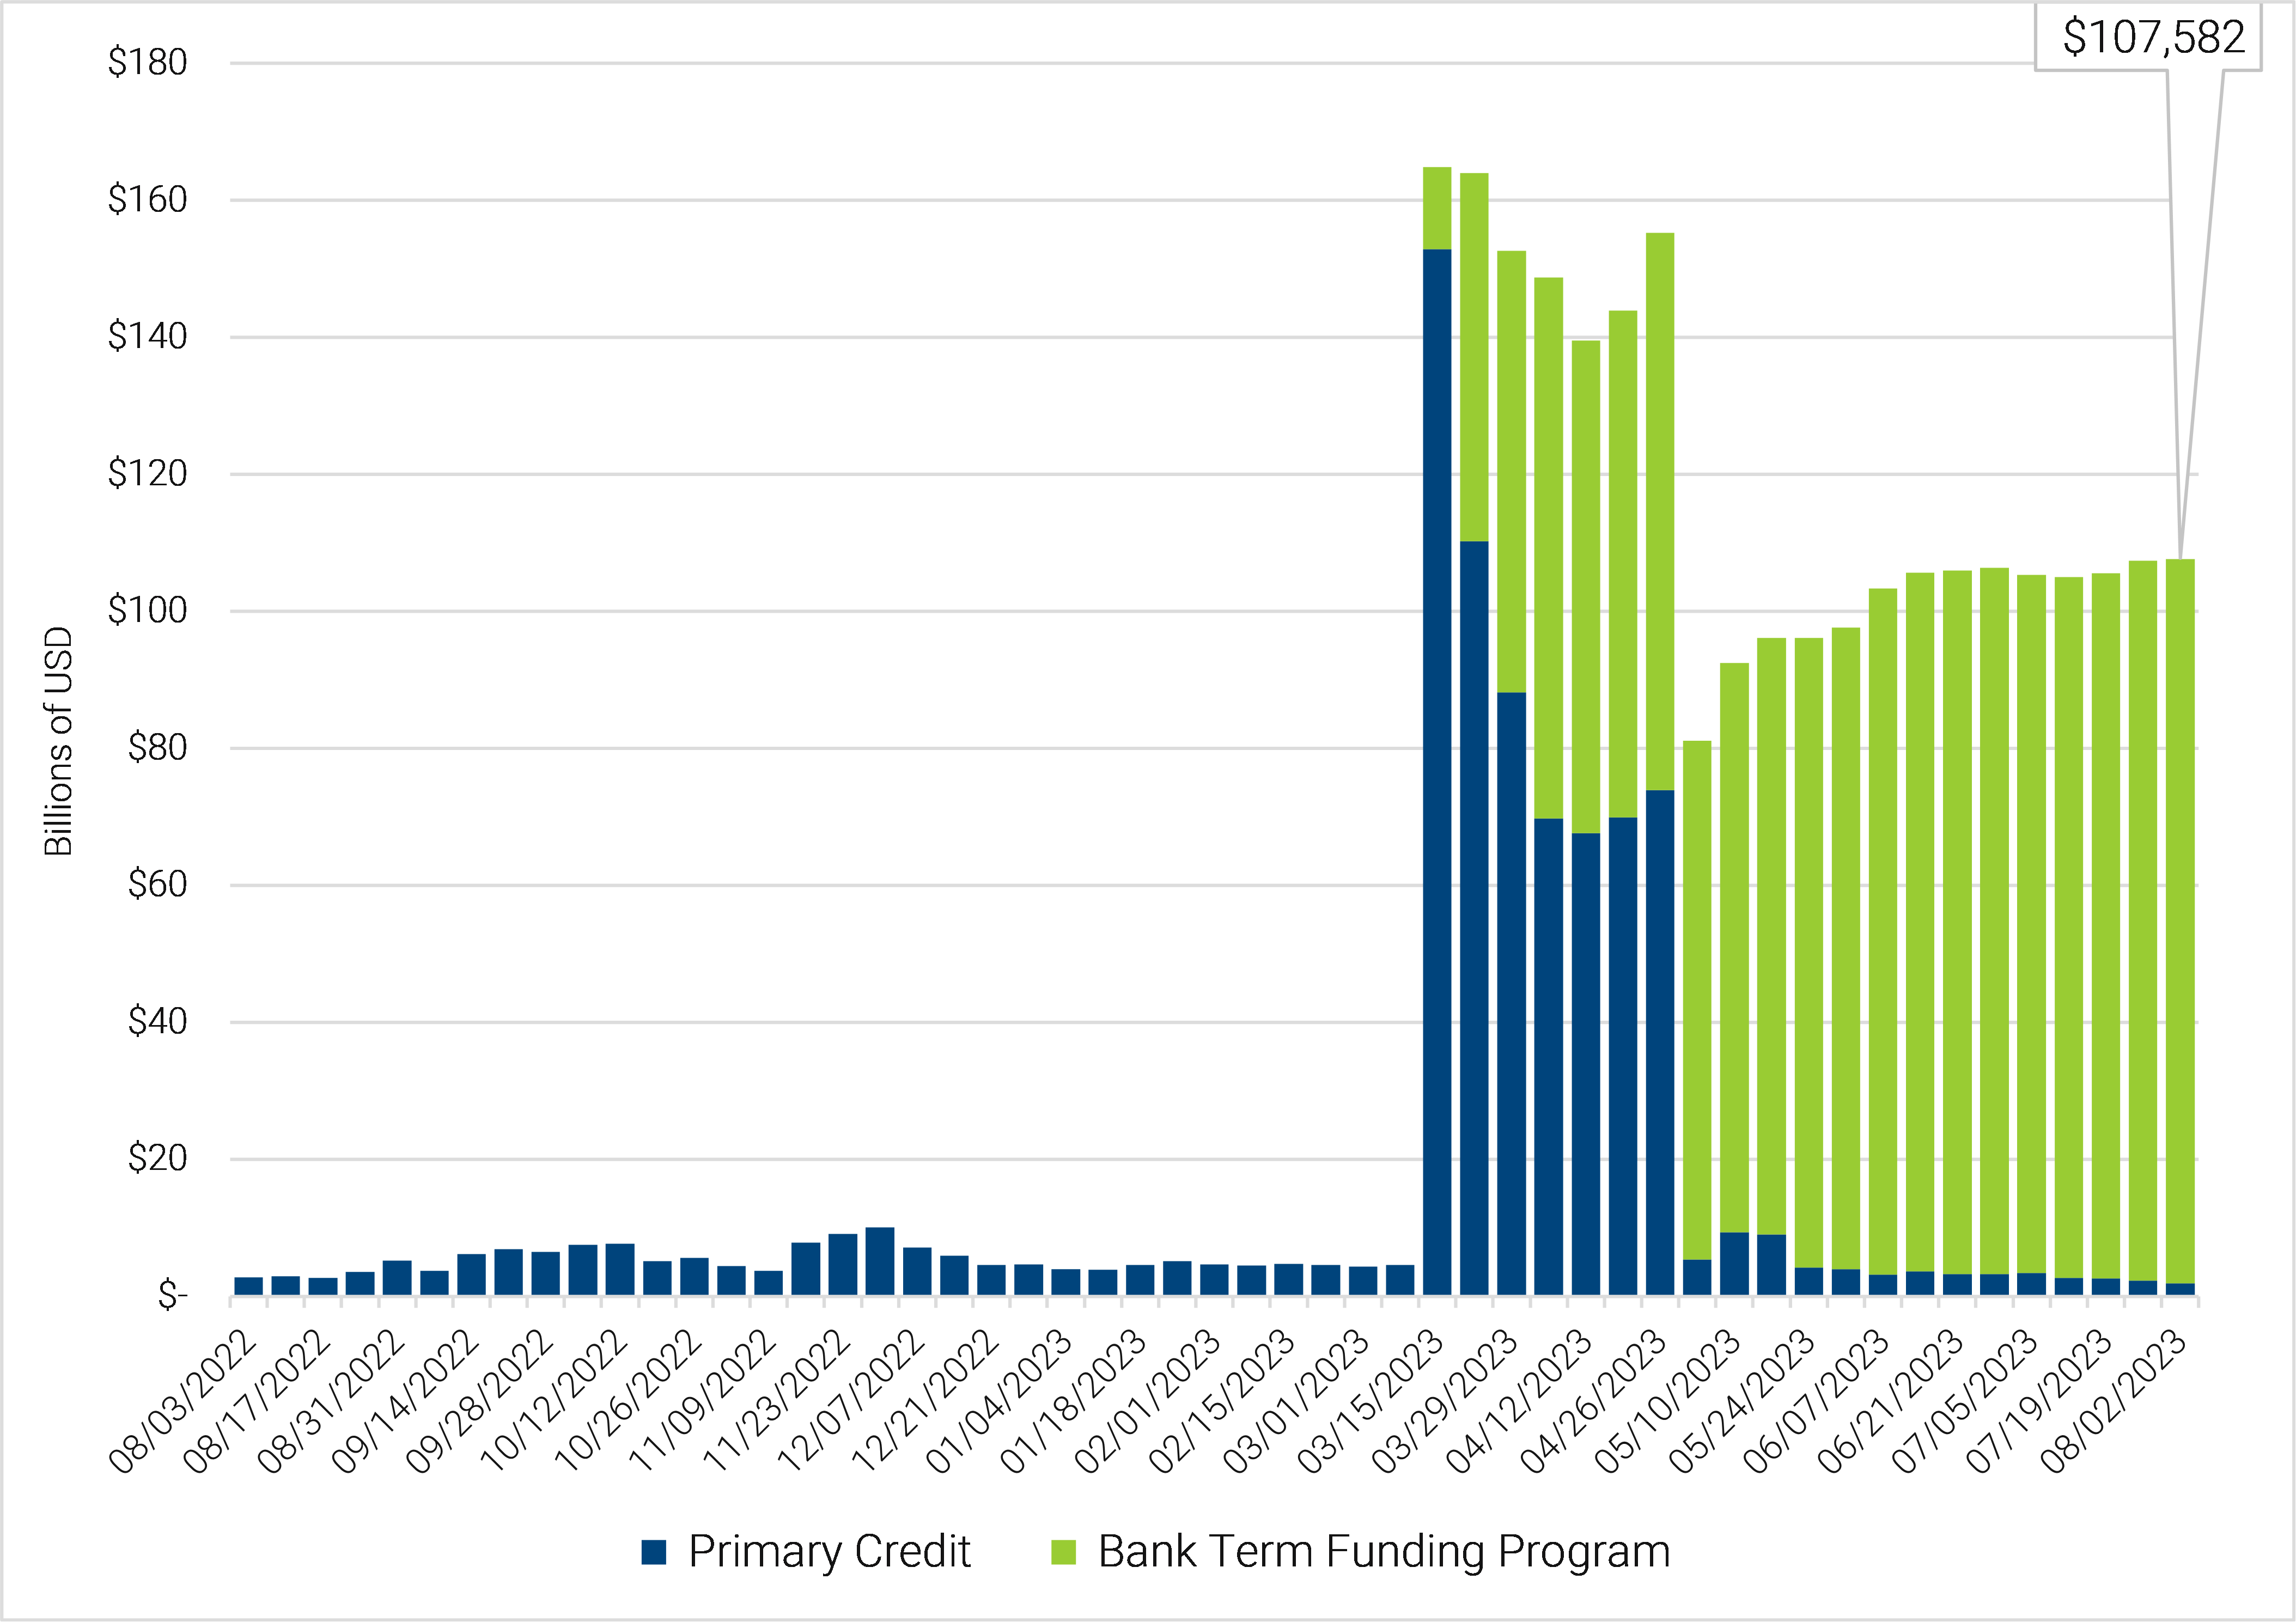 18-bank-term-funding-program-usage-reached-another-new-peak-last-week